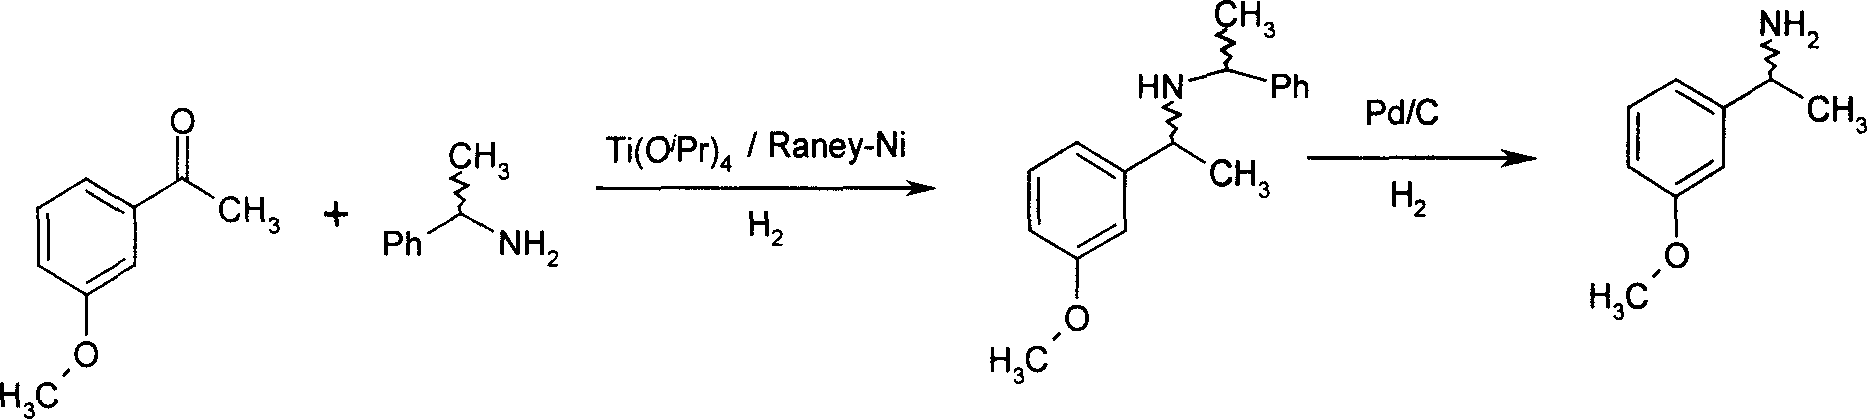 Method for preparing optical active 1-(3-methoxy phenyl) ethylamine